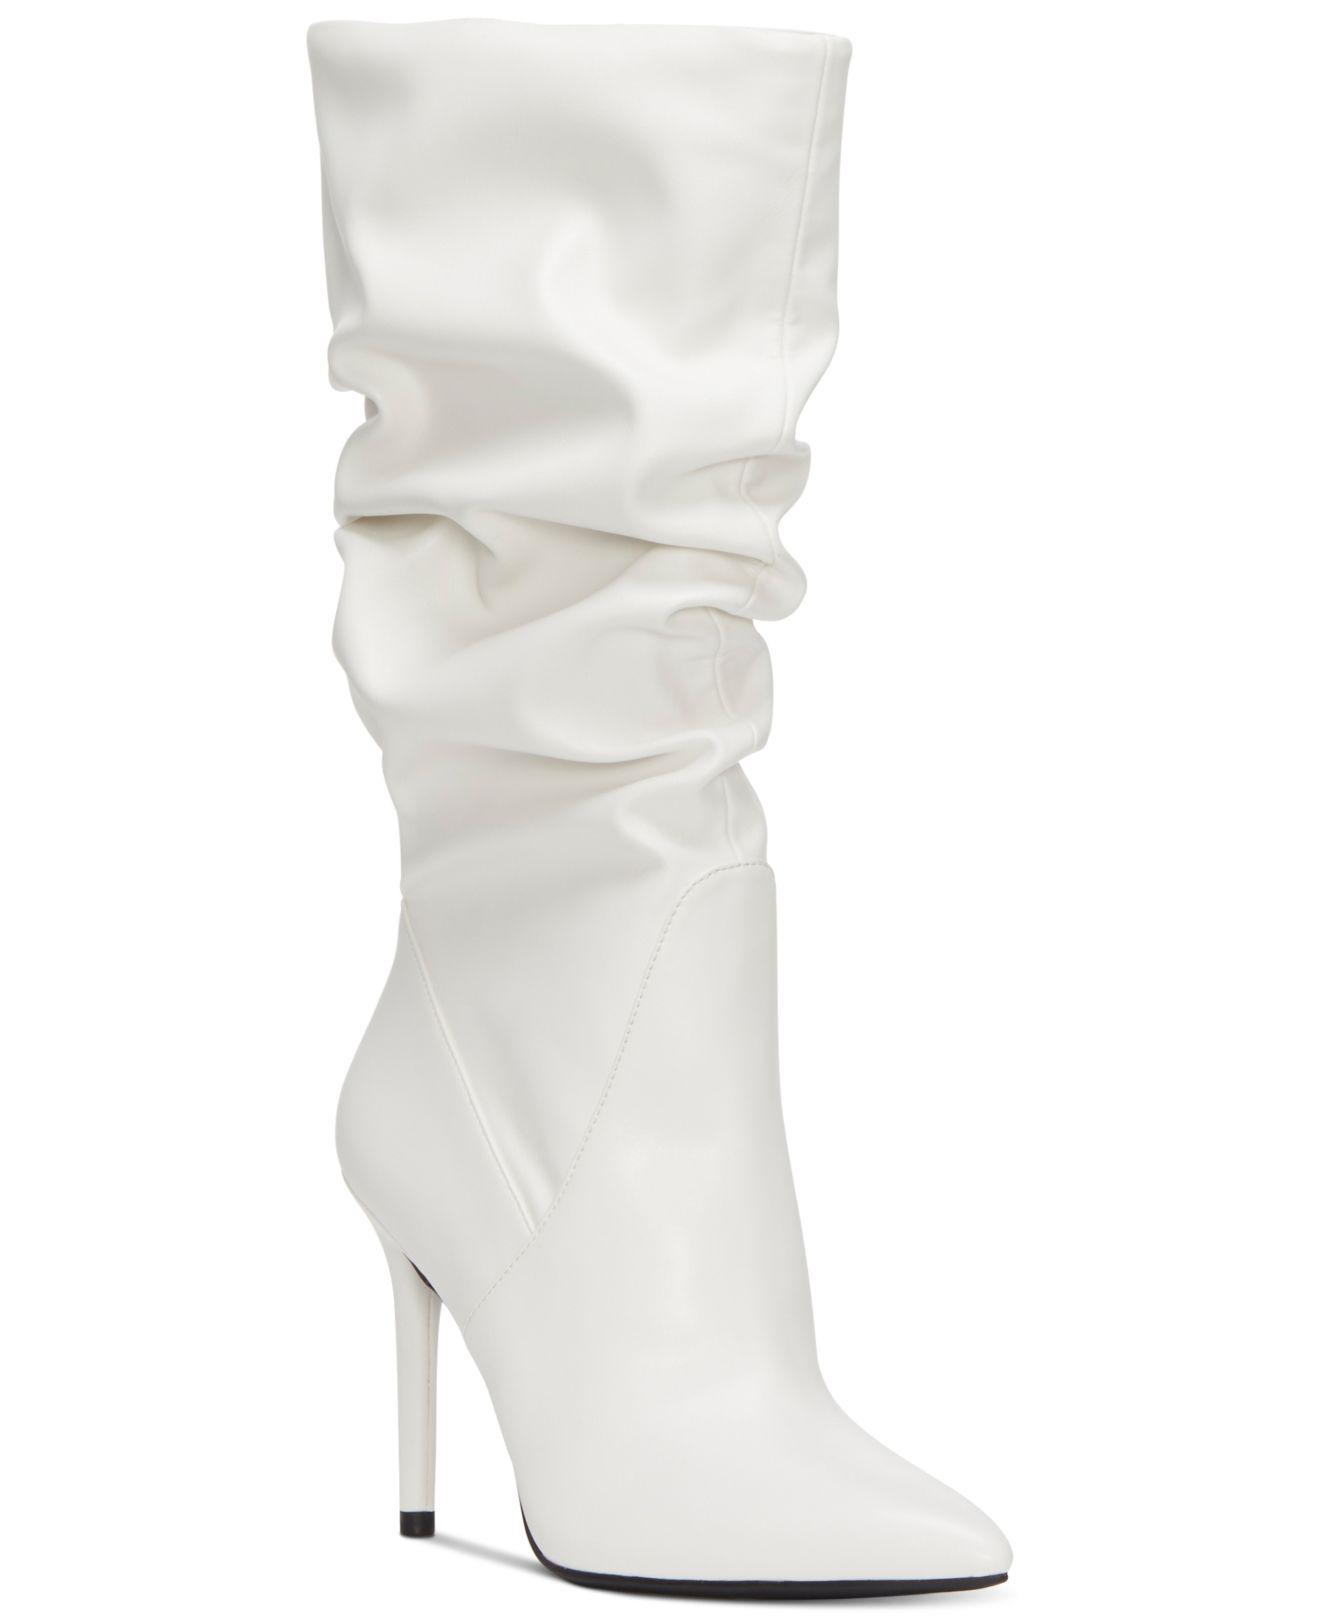 jessica simpson white boots